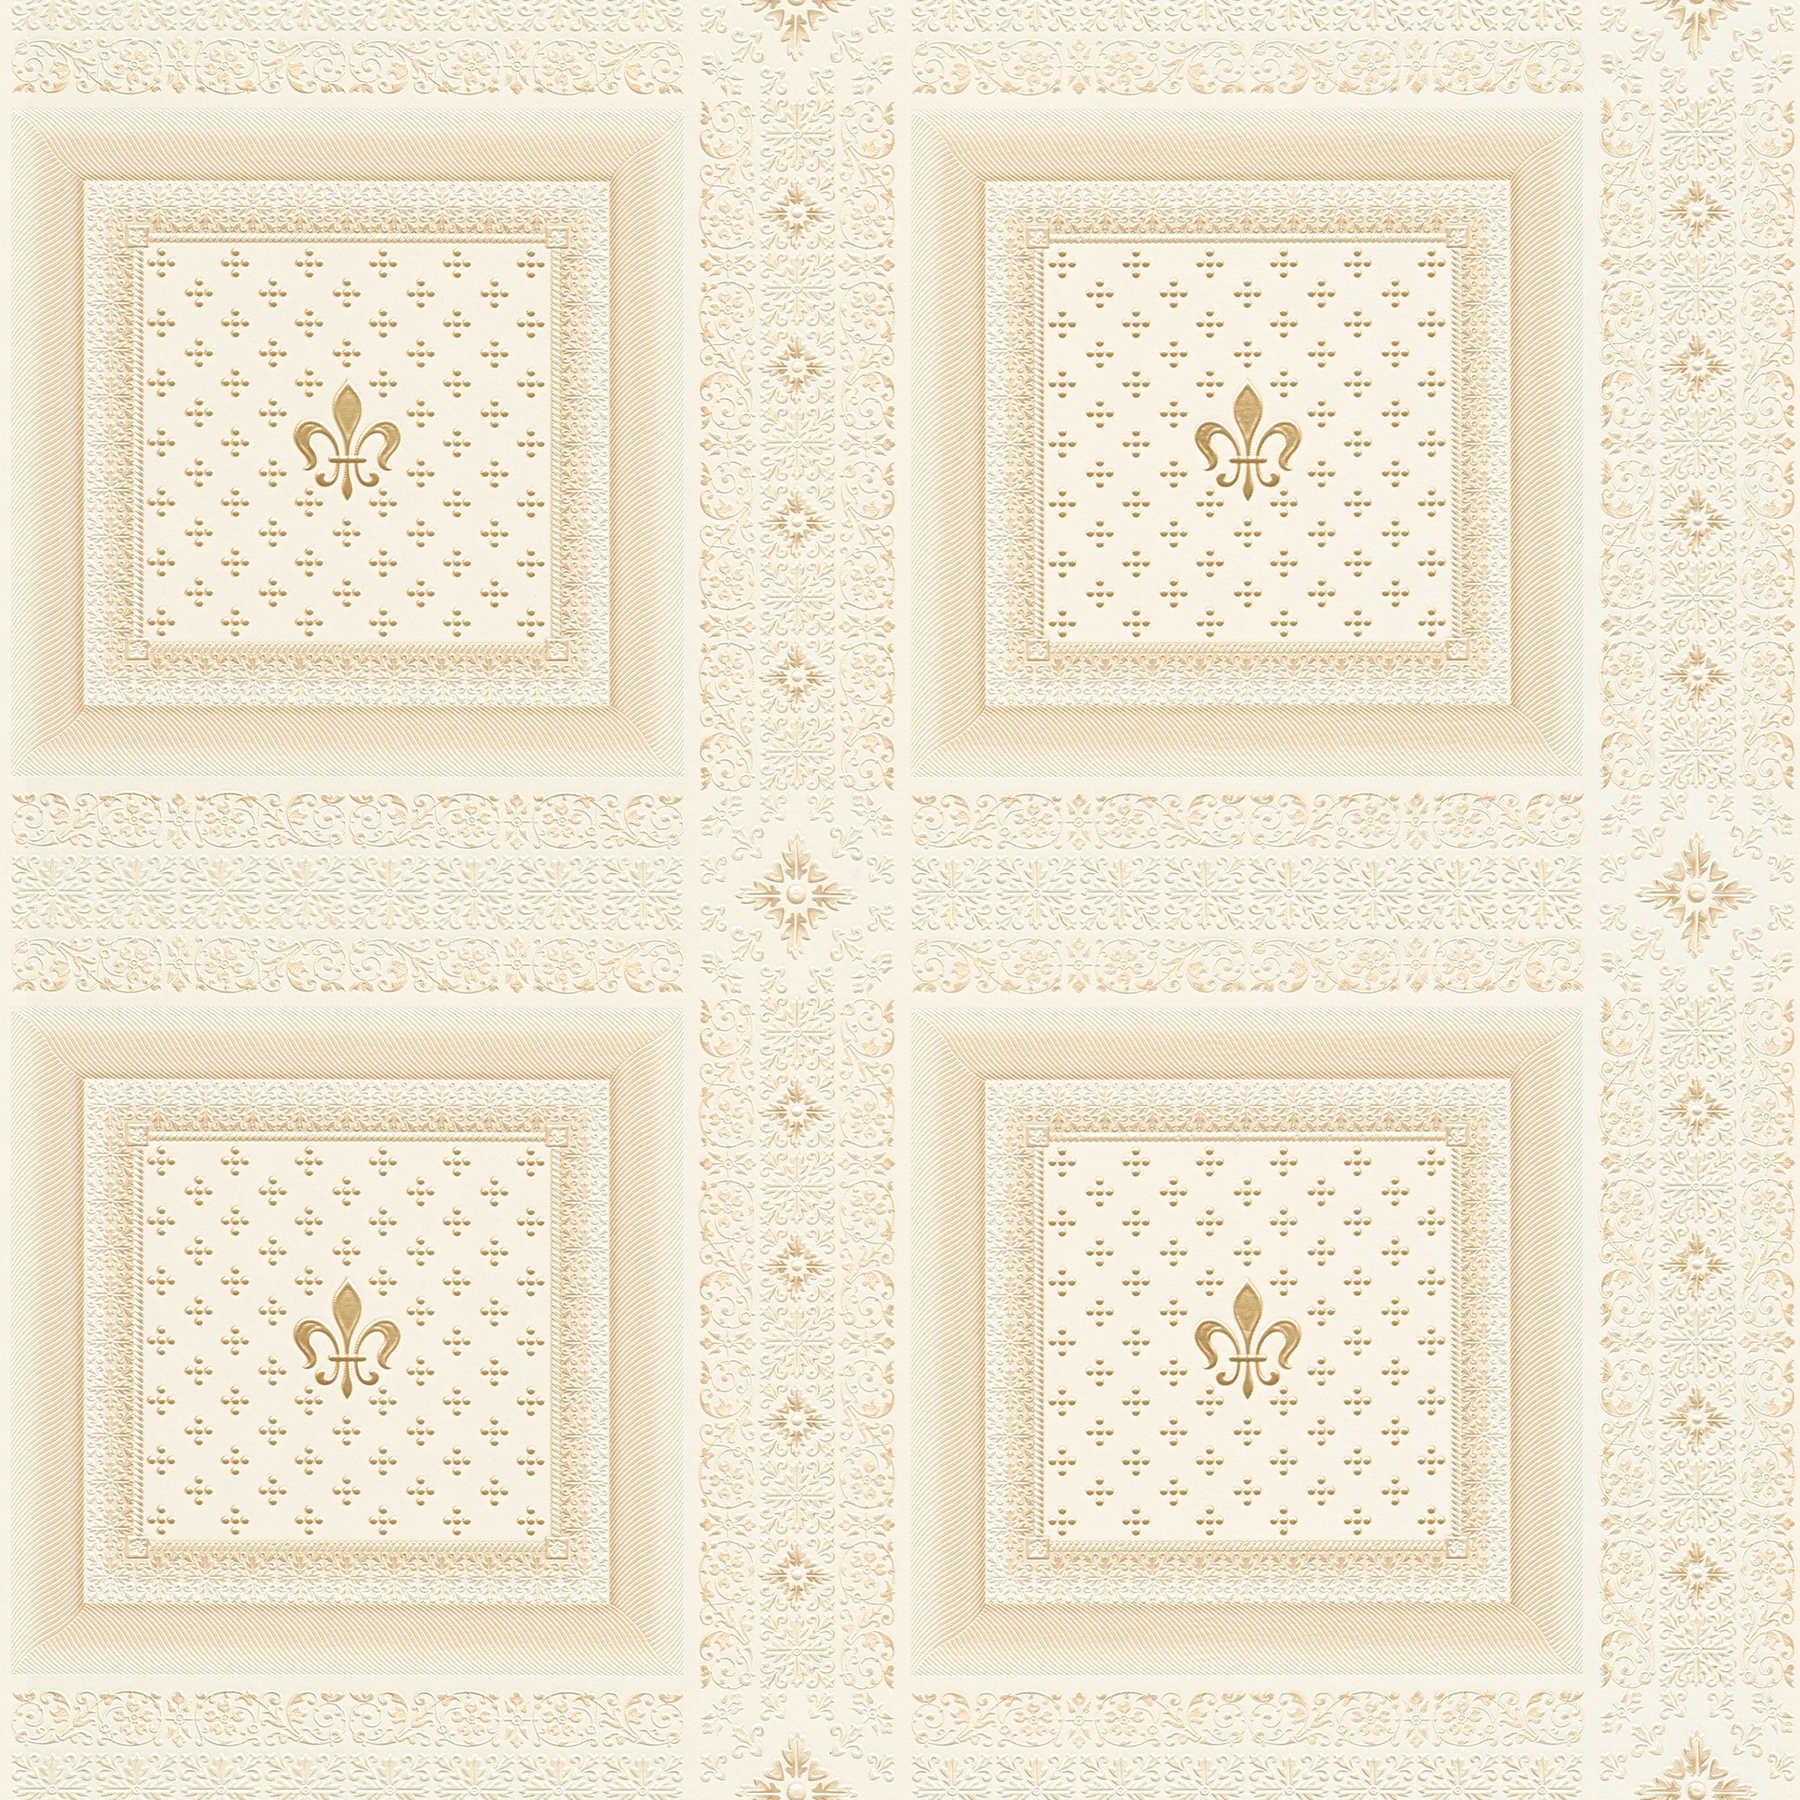         wallpaper Flour-de-lis design - beige, cream
    